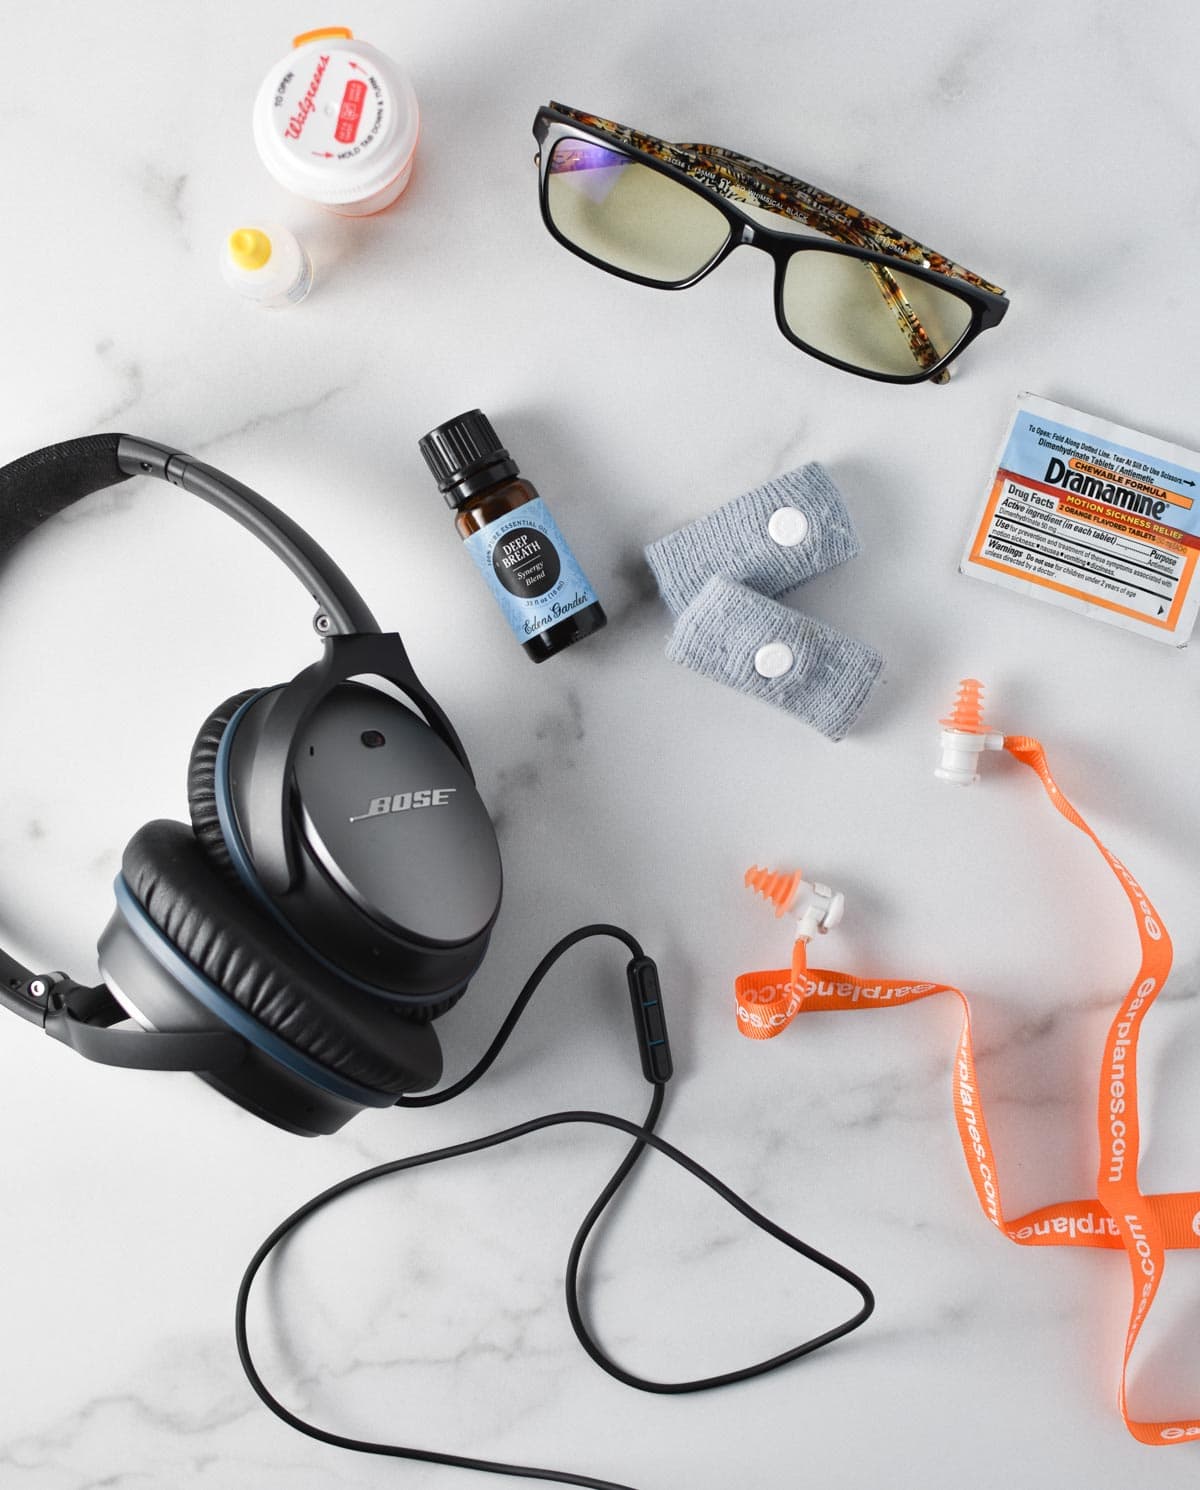 Headphones, sea bands, migraine glasses, earplanes, and timolol eye drops on a white table